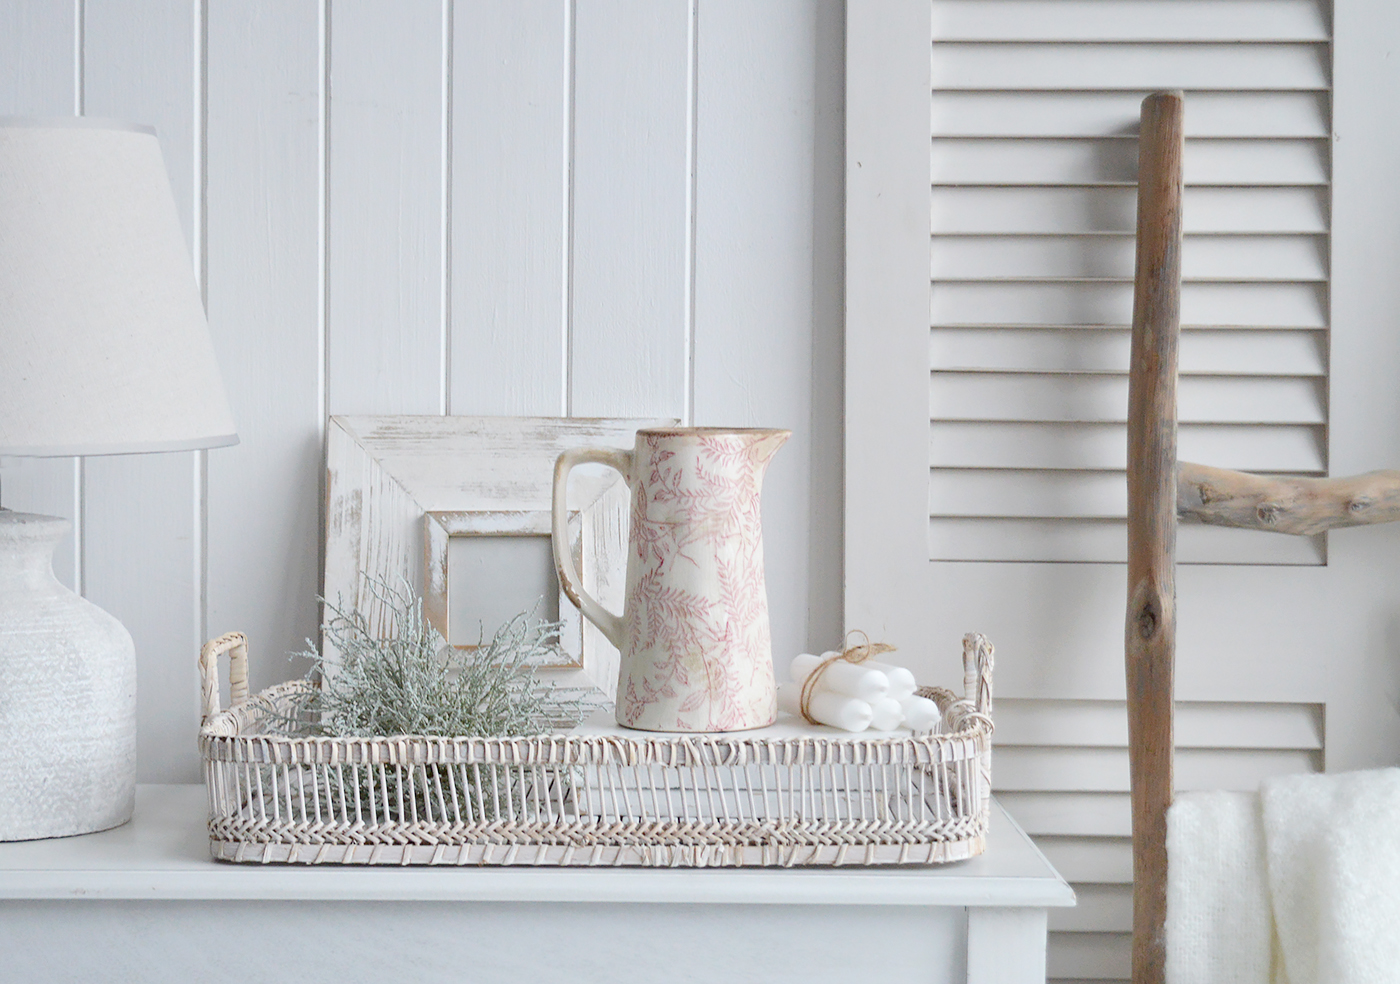 Tolland Vintage Jug - pink ceramics for New England, Country, Farmhouse and coastal home interior decor